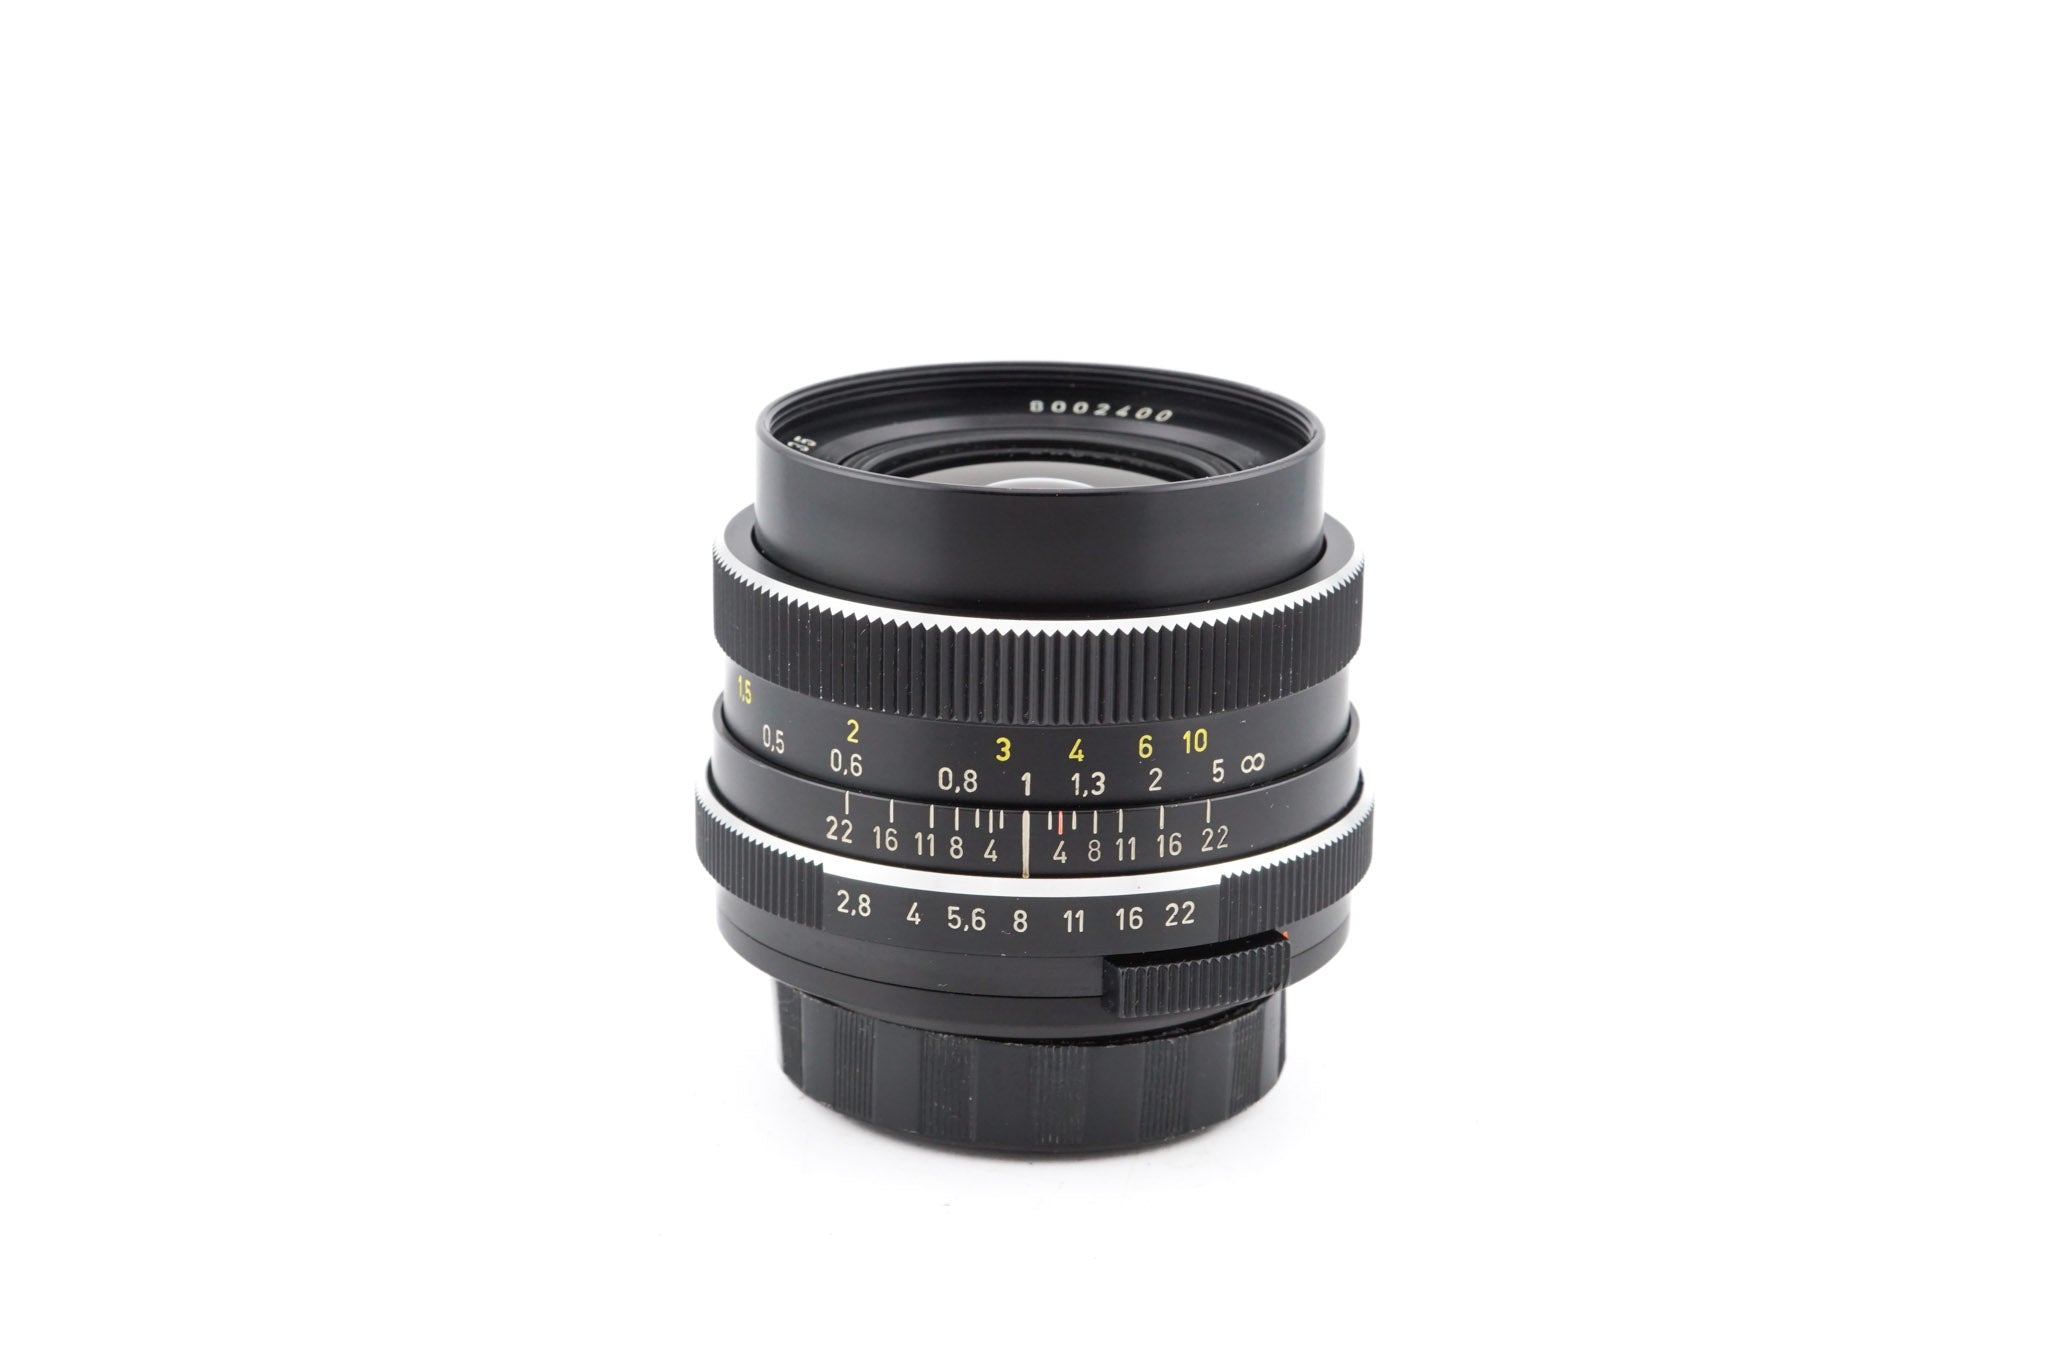 Carl Zeiss 35mm f2.8 Distagon - Lens